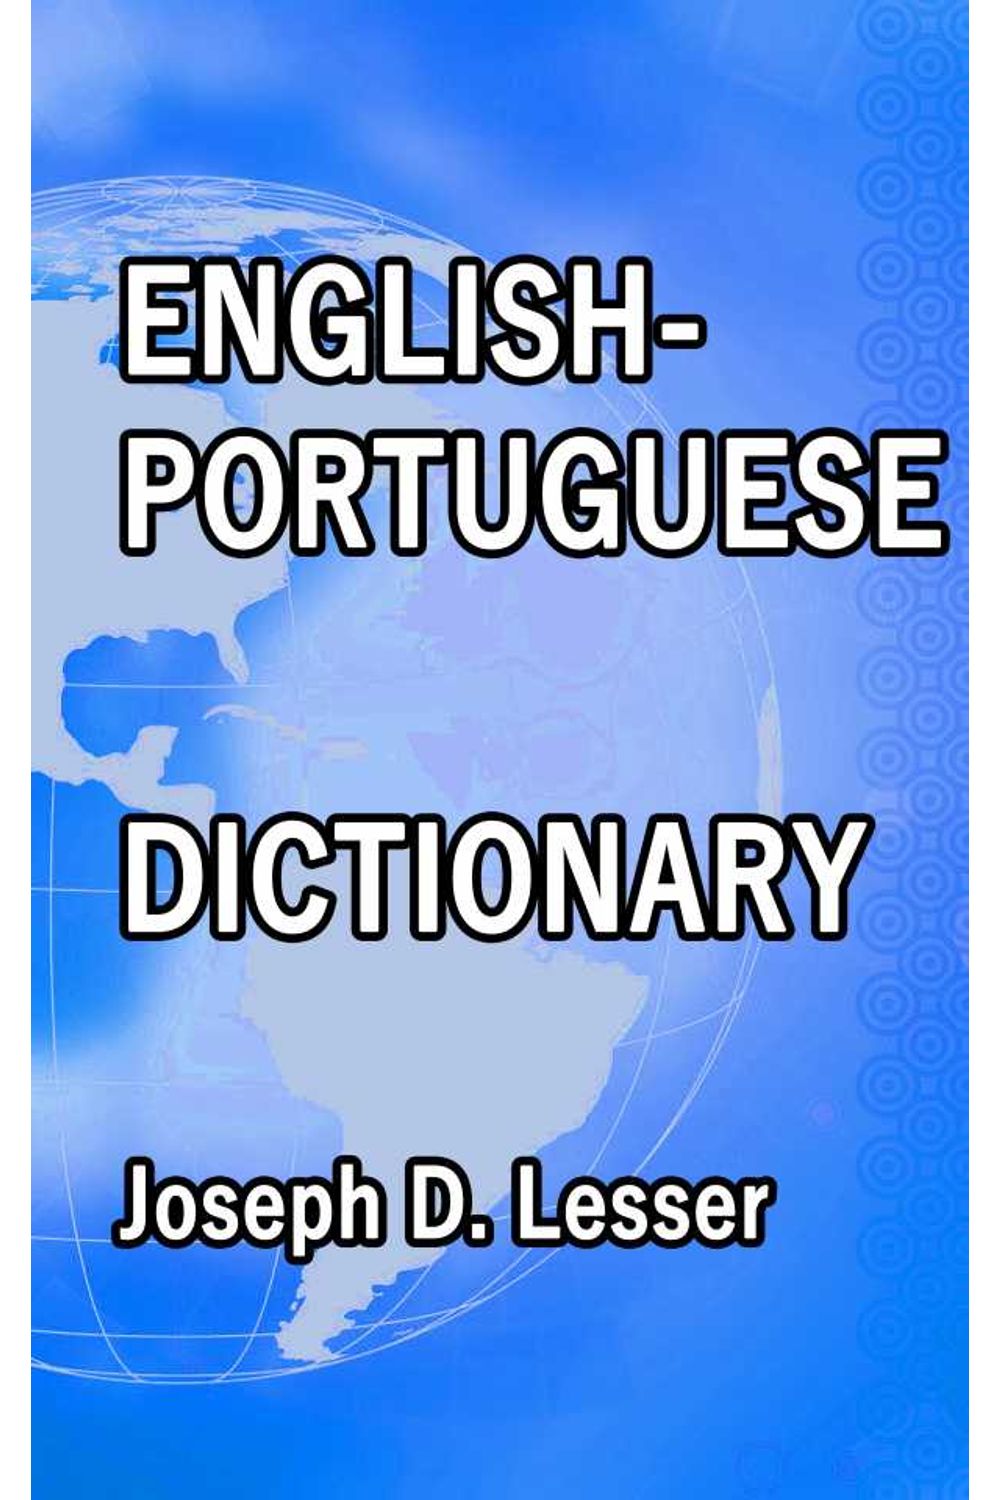 bw-english-portuguese-dictionary-joseph-d-lesser-9783965087330